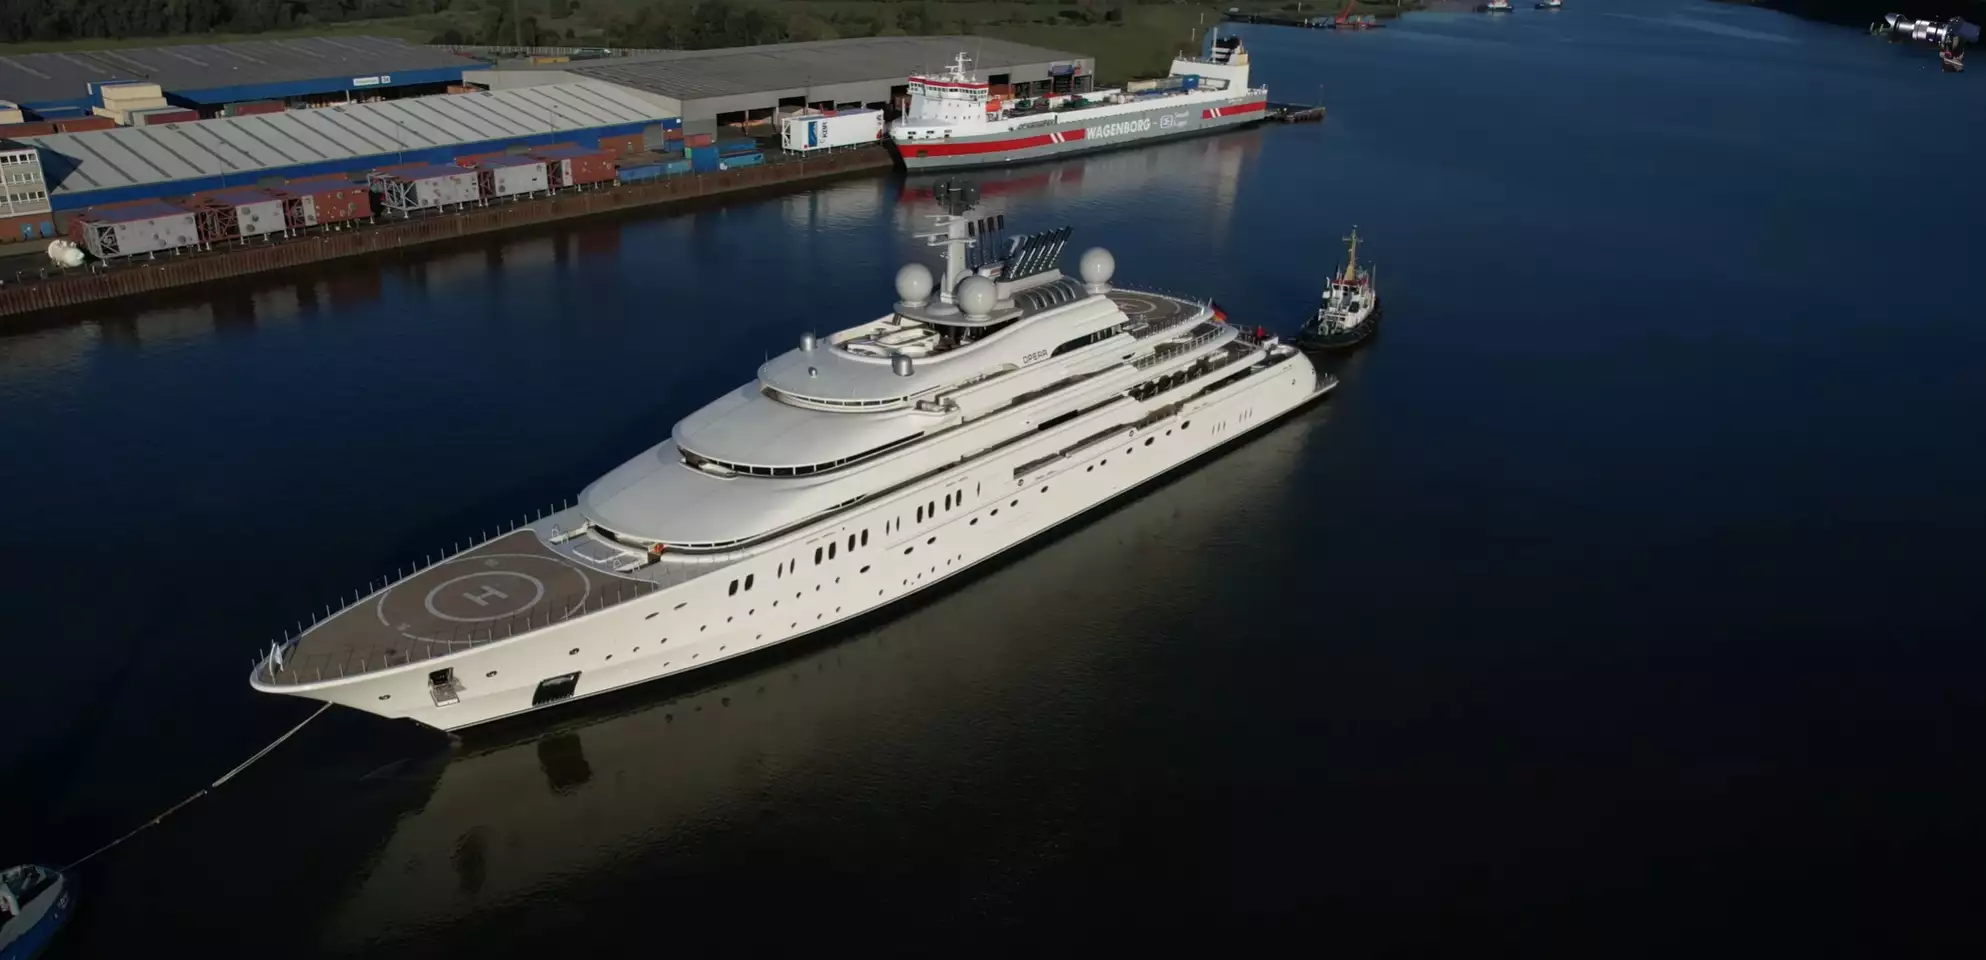 OPERA Yacht • Lurssen • 2022 • Proprietario Abdullah bin Zayed Al Nahyan